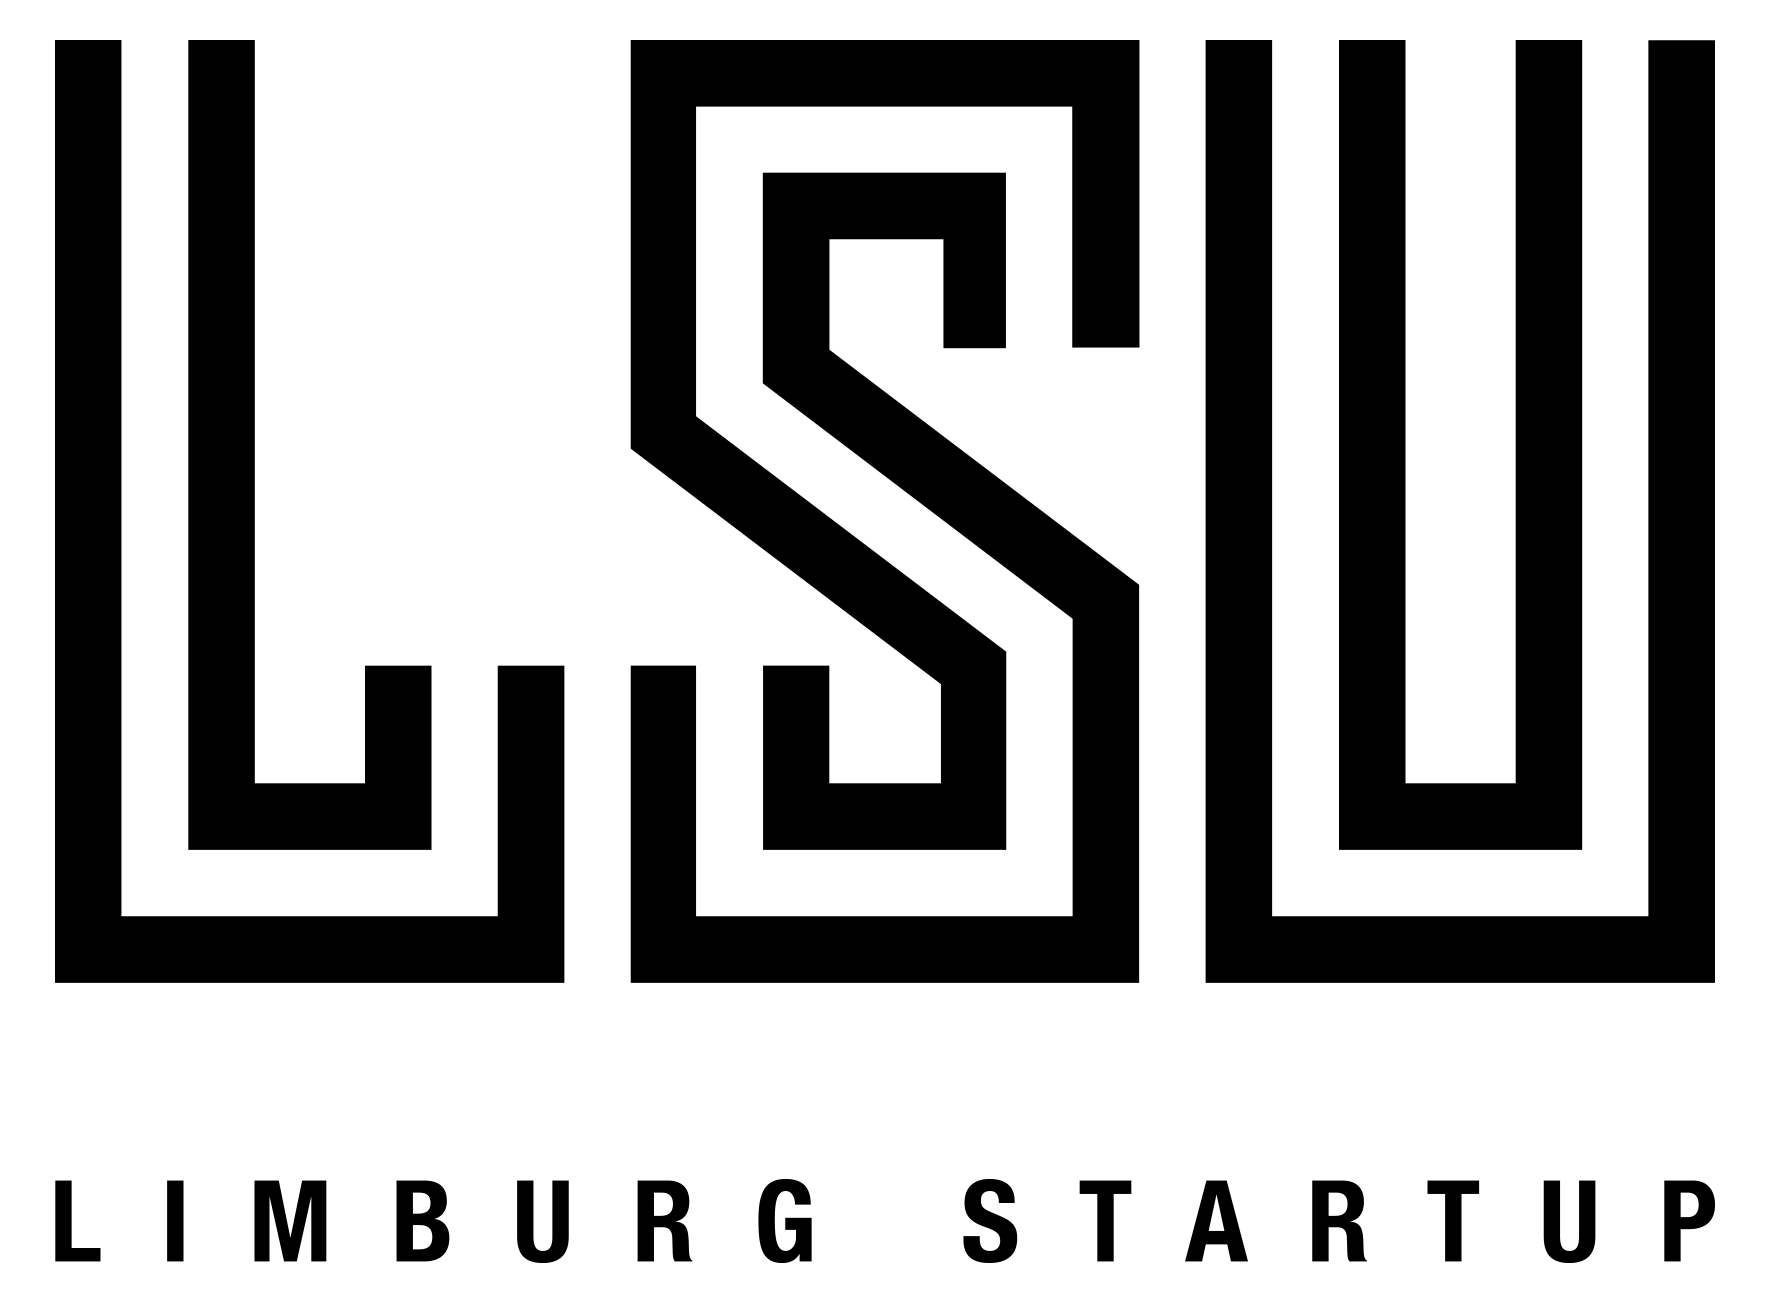 Limburg Startup